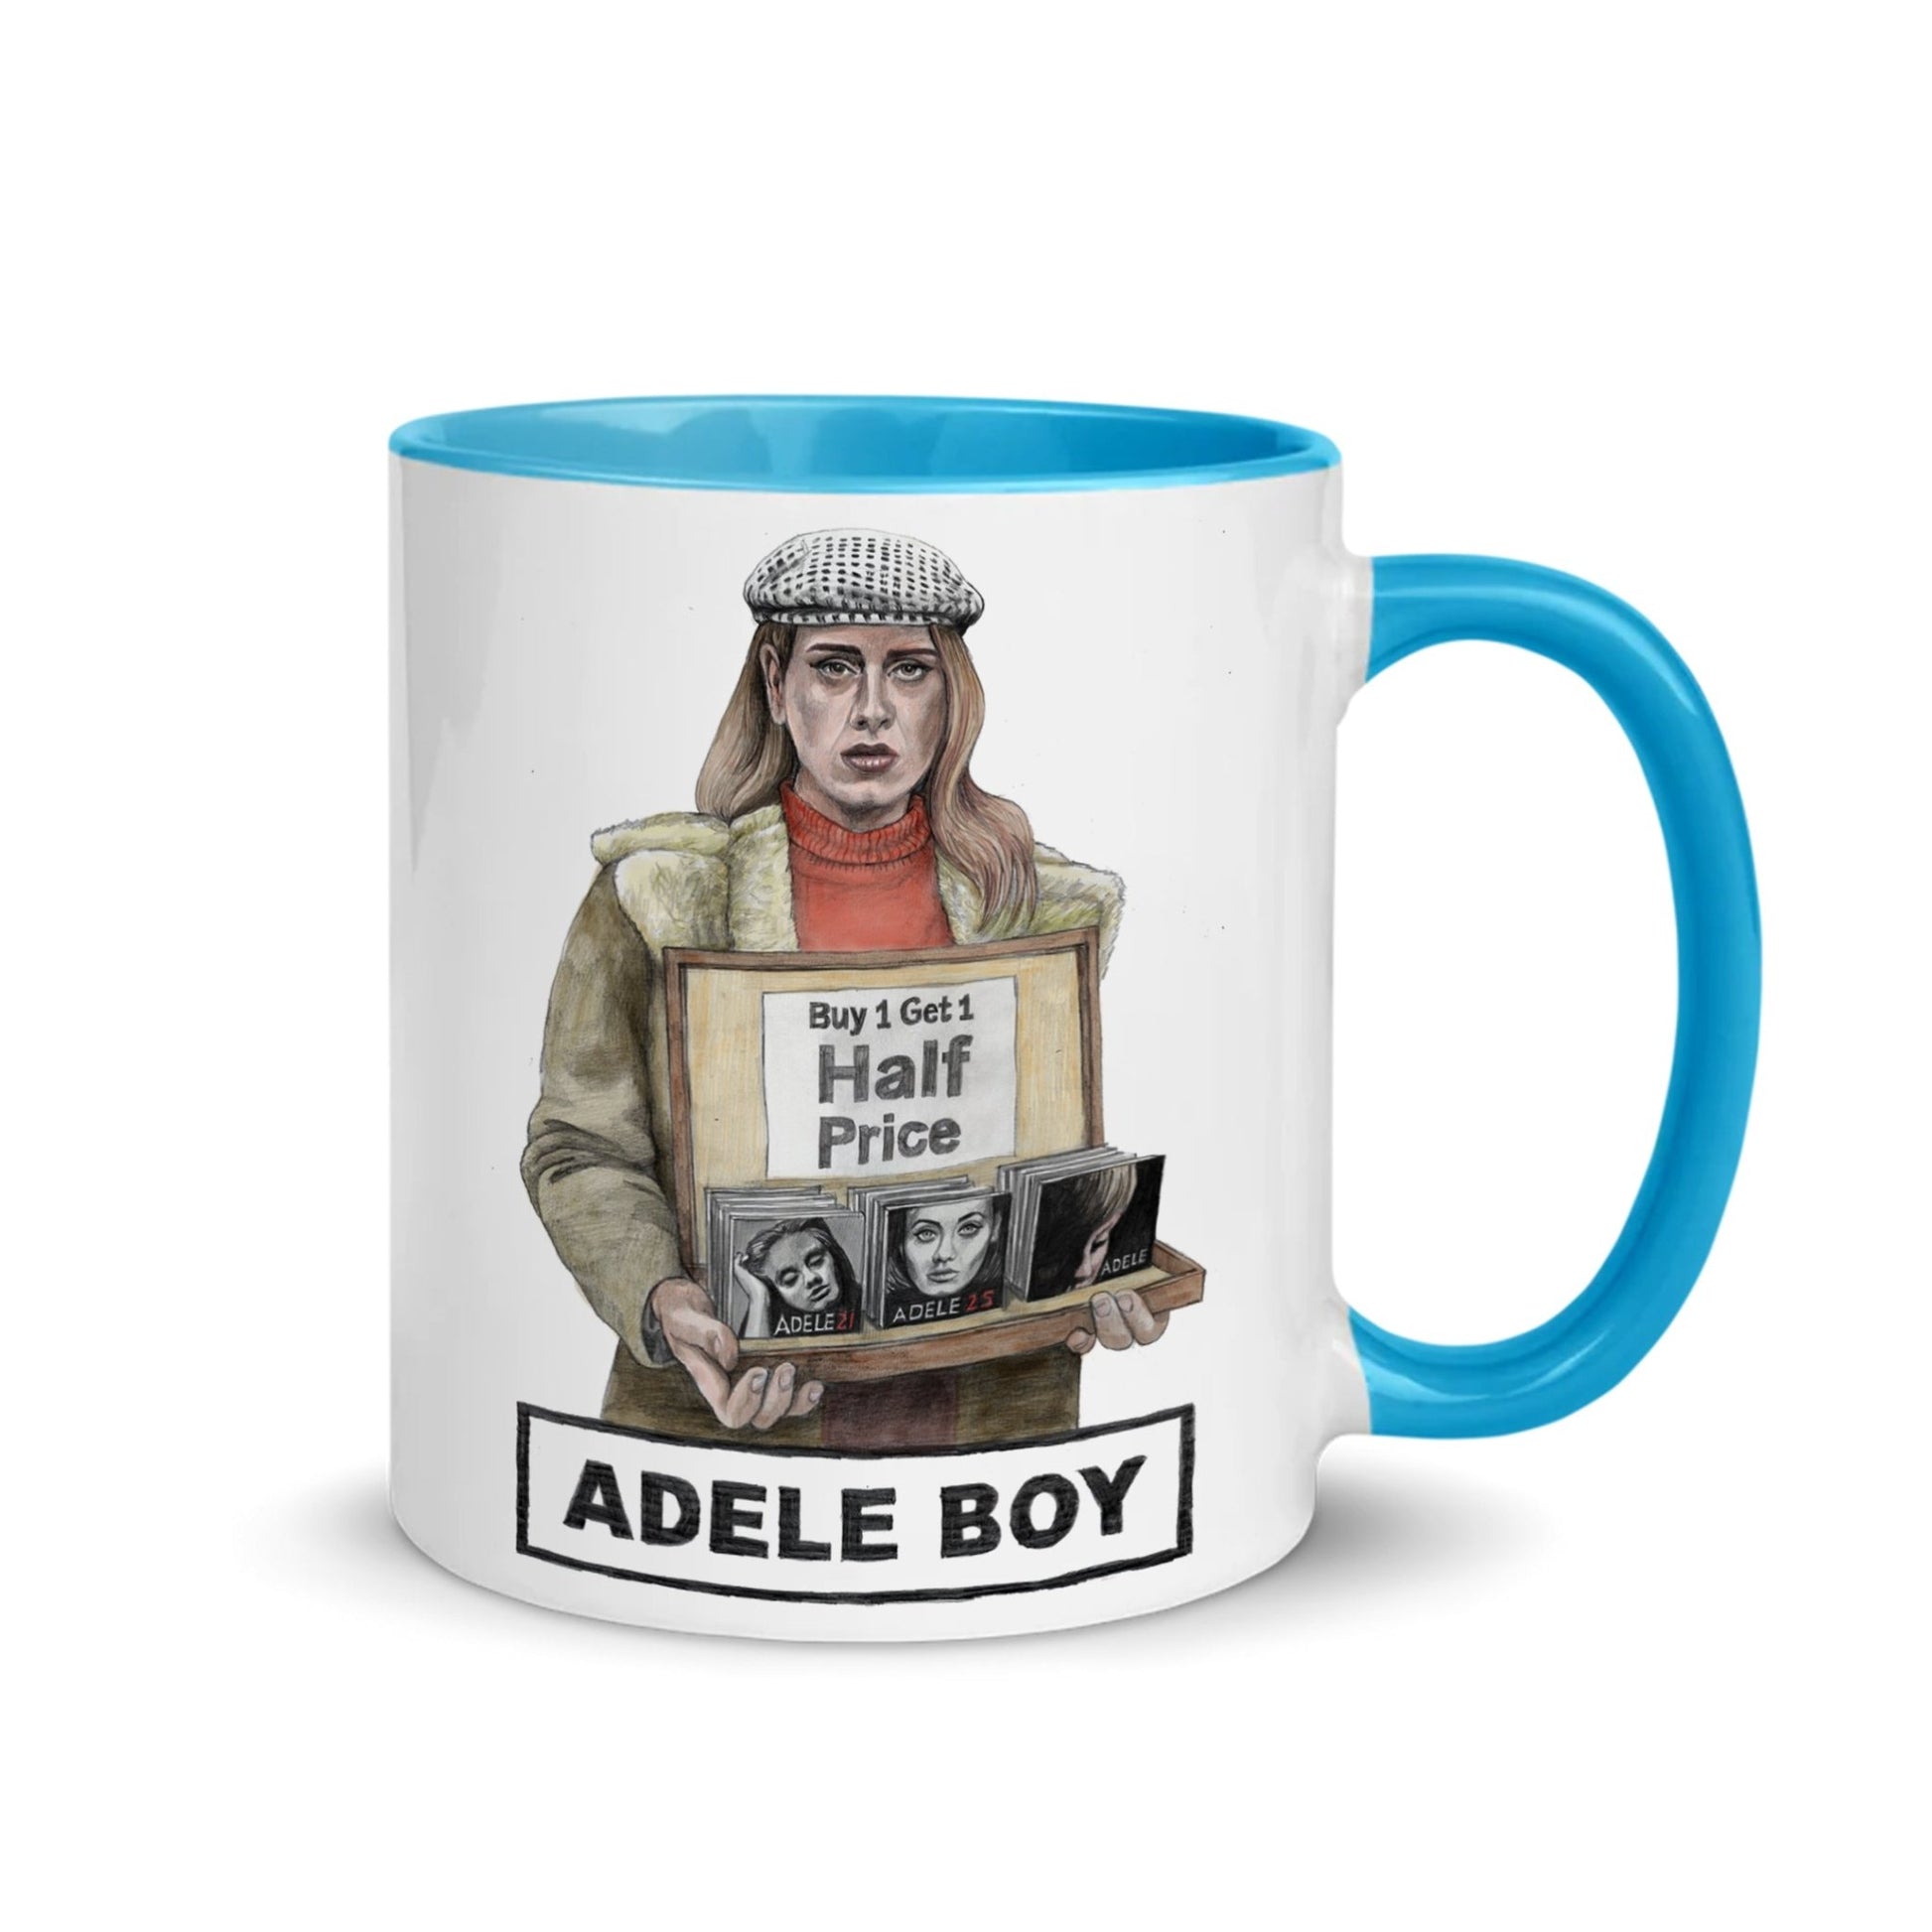 Adele Boy Ceramic Mug - Quite Good Cards Funny Birthday Card